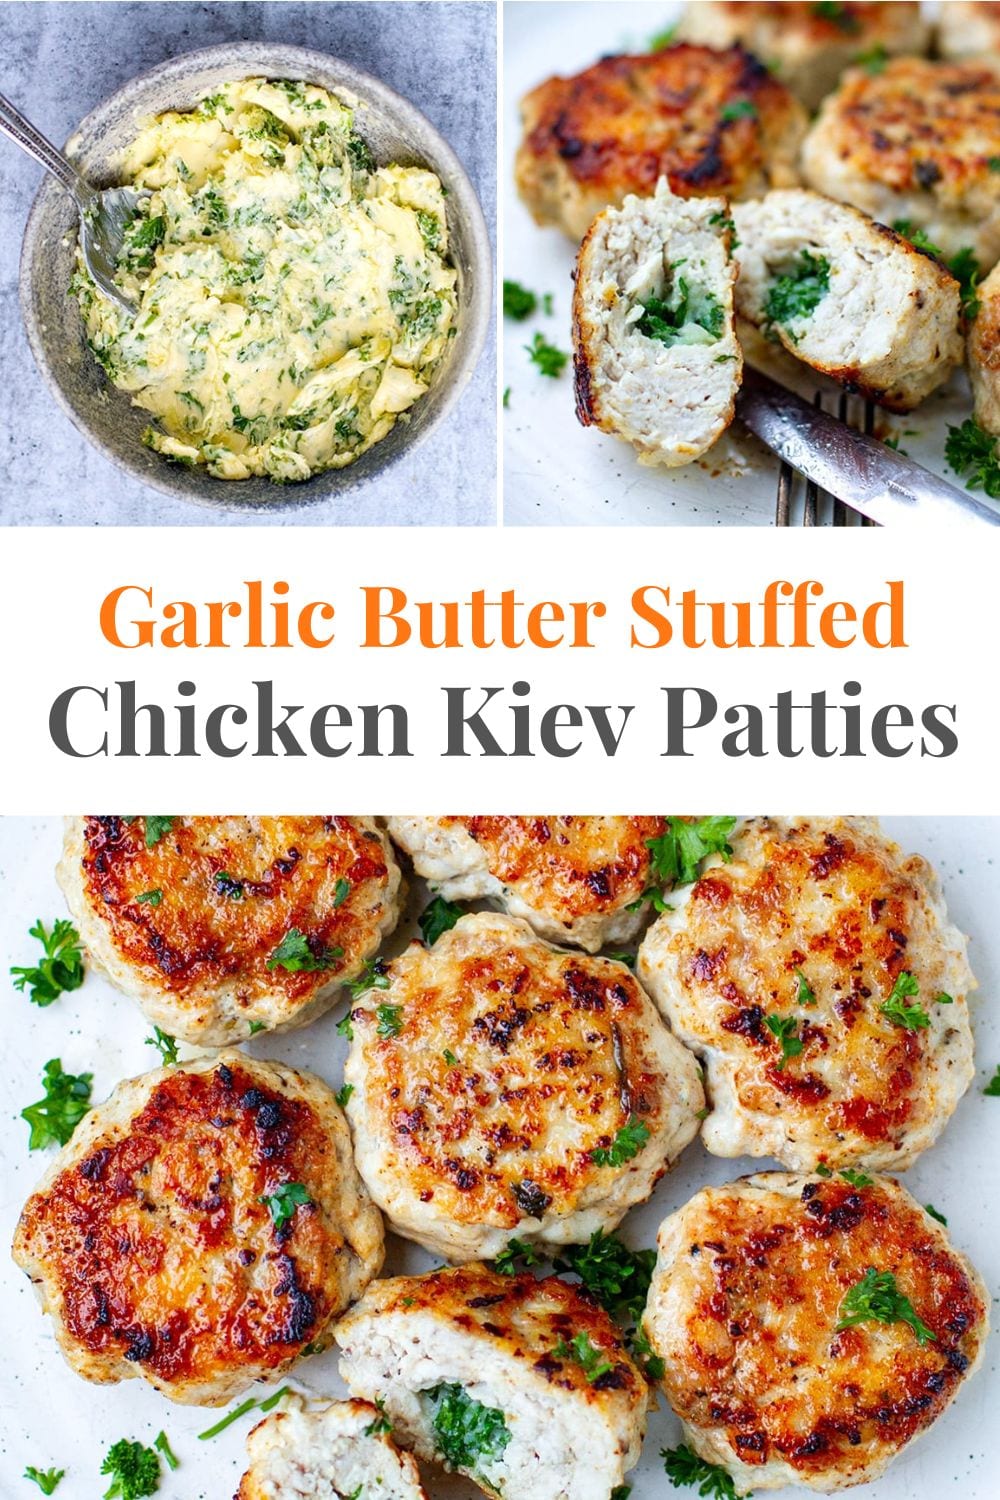 Chicken Kiev Patties Stuffed With Garlic Herb Butter